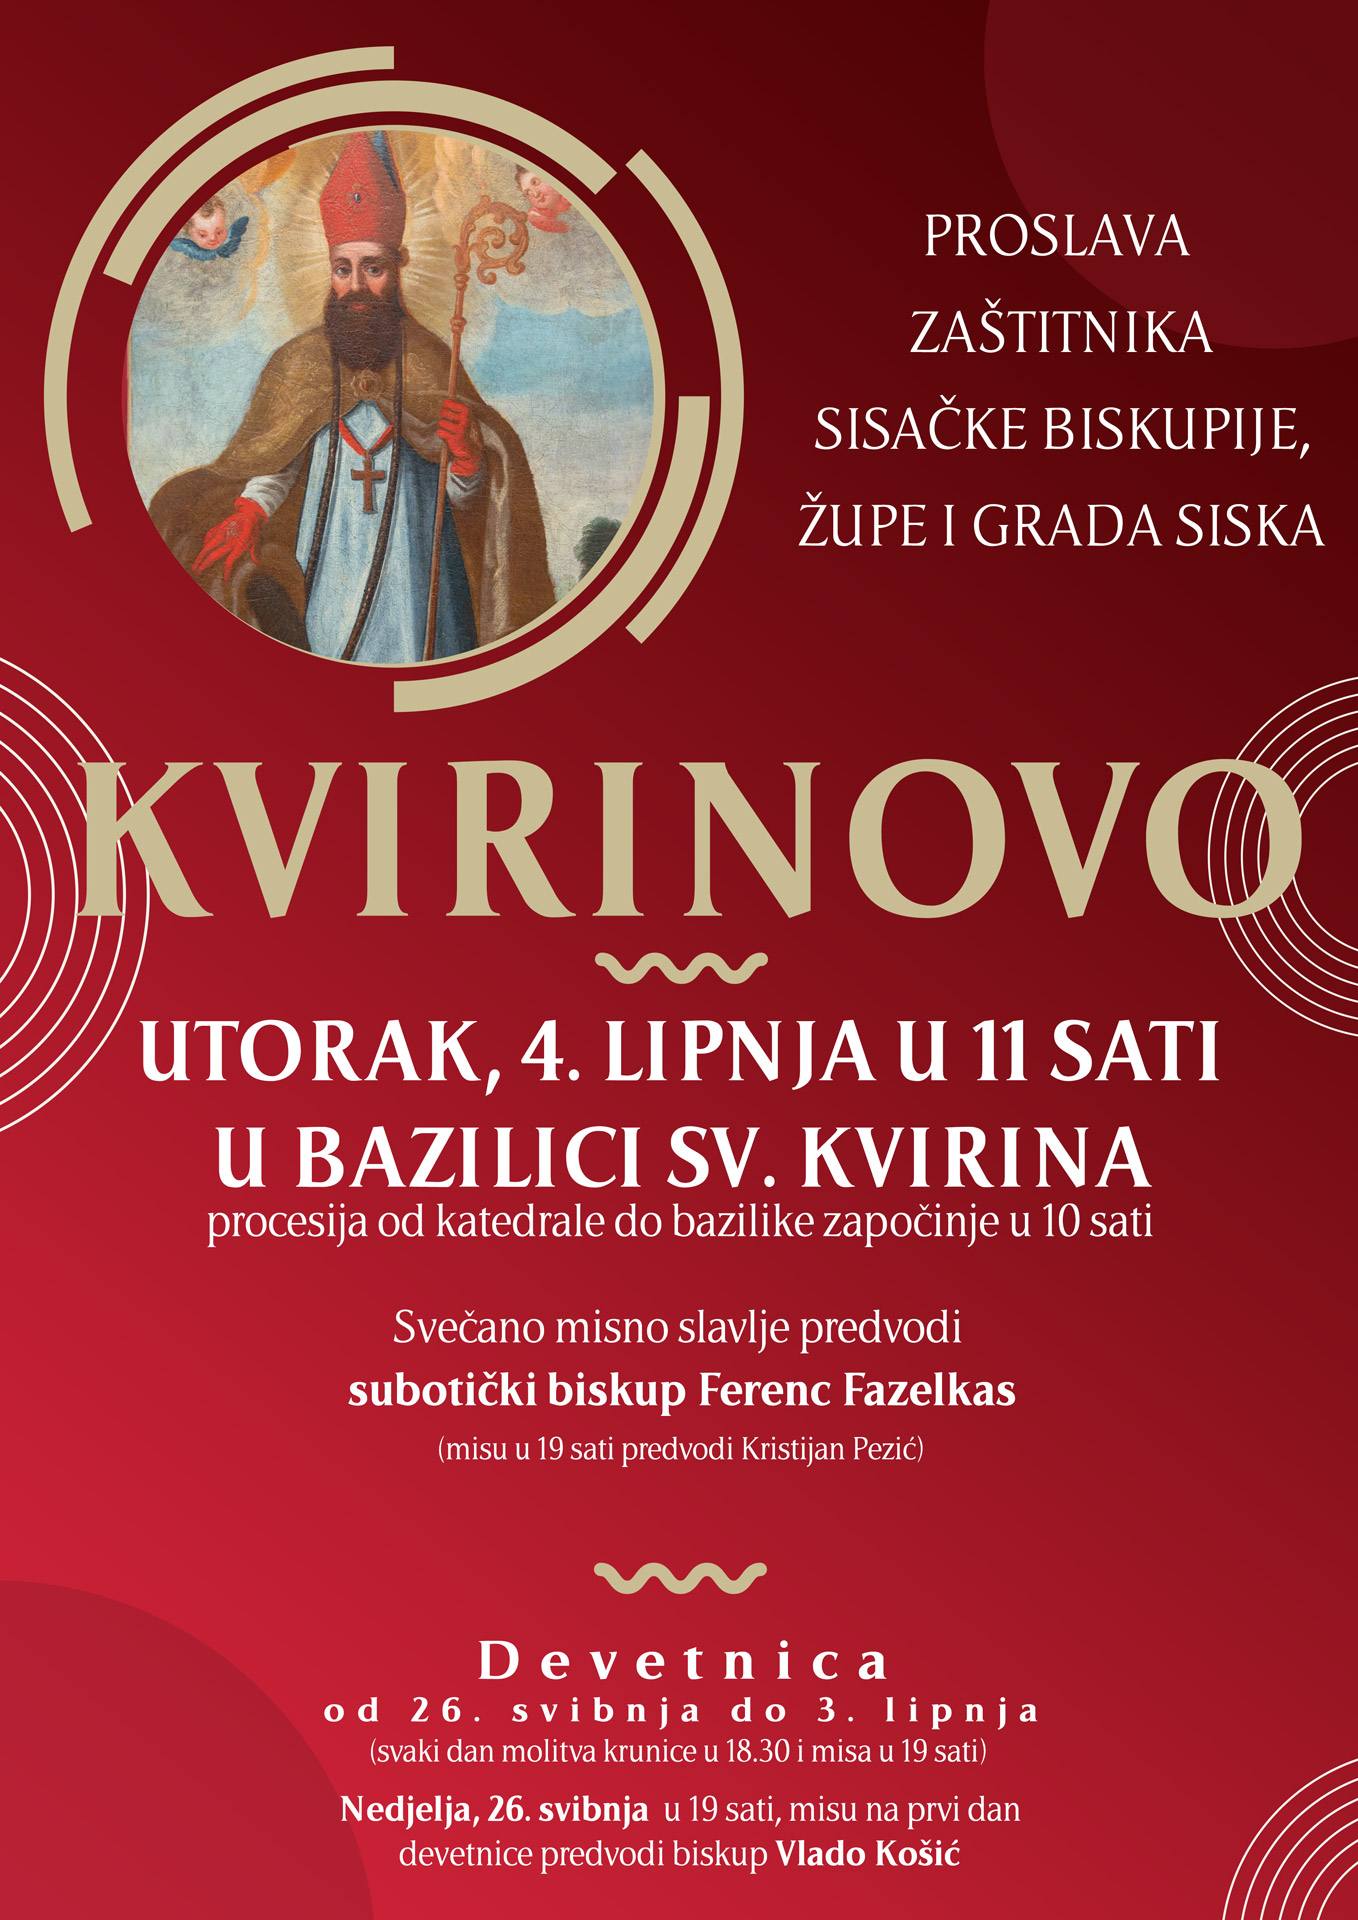 You are currently viewing Svetkovina sv. Kvirina u utorak, 4. lipnja